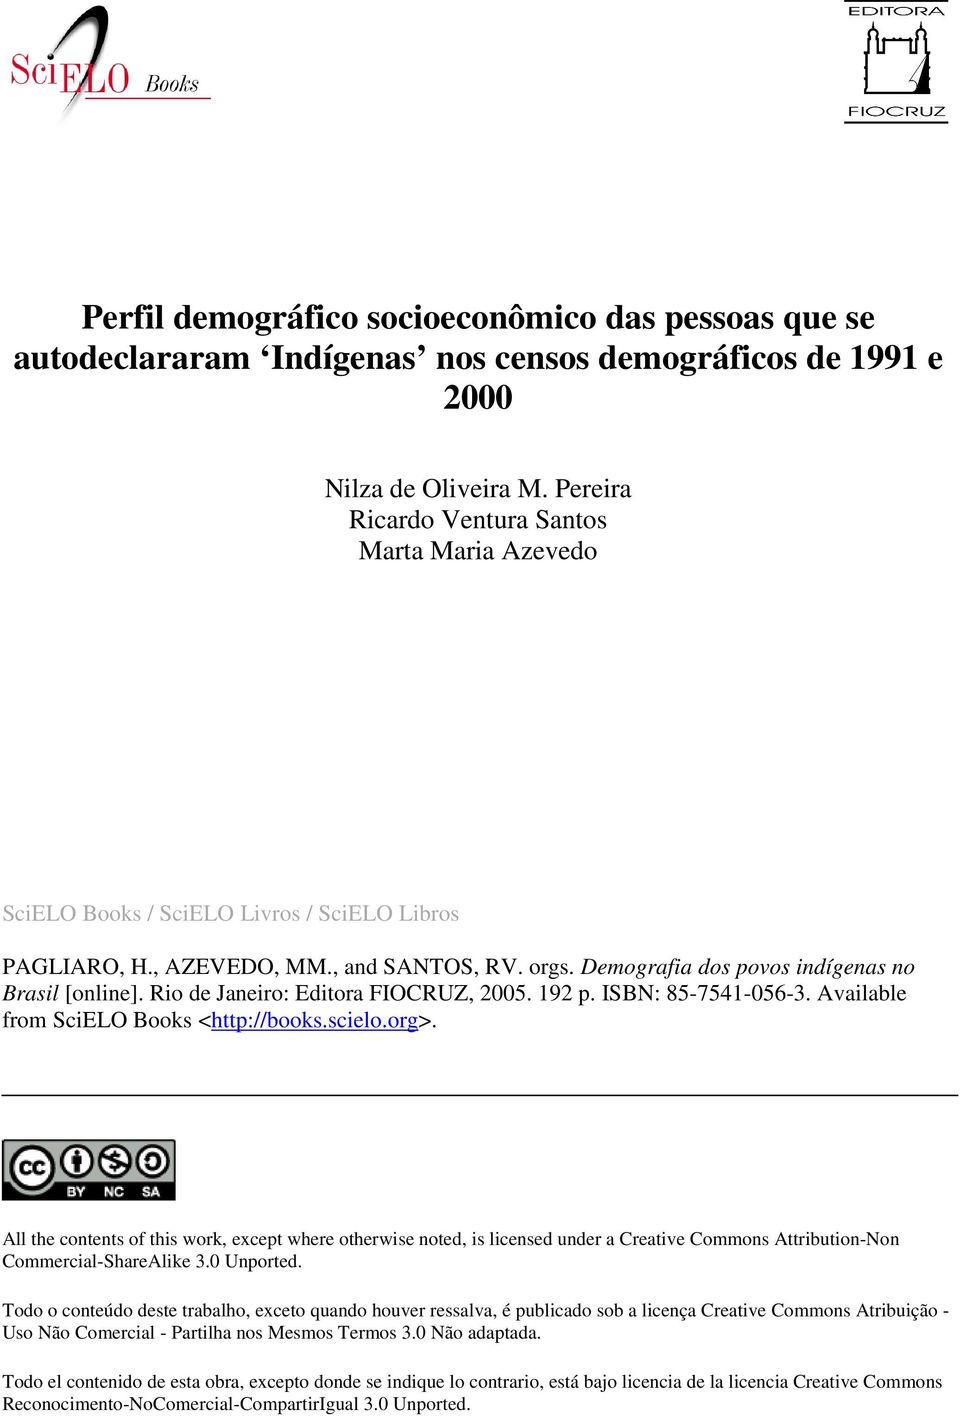 Rio de Janeiro: Editora FIOCRUZ, 2005. 192 p. ISBN: 85-7541-056-3. Available from SciELO Books <http://books.scielo.org>.